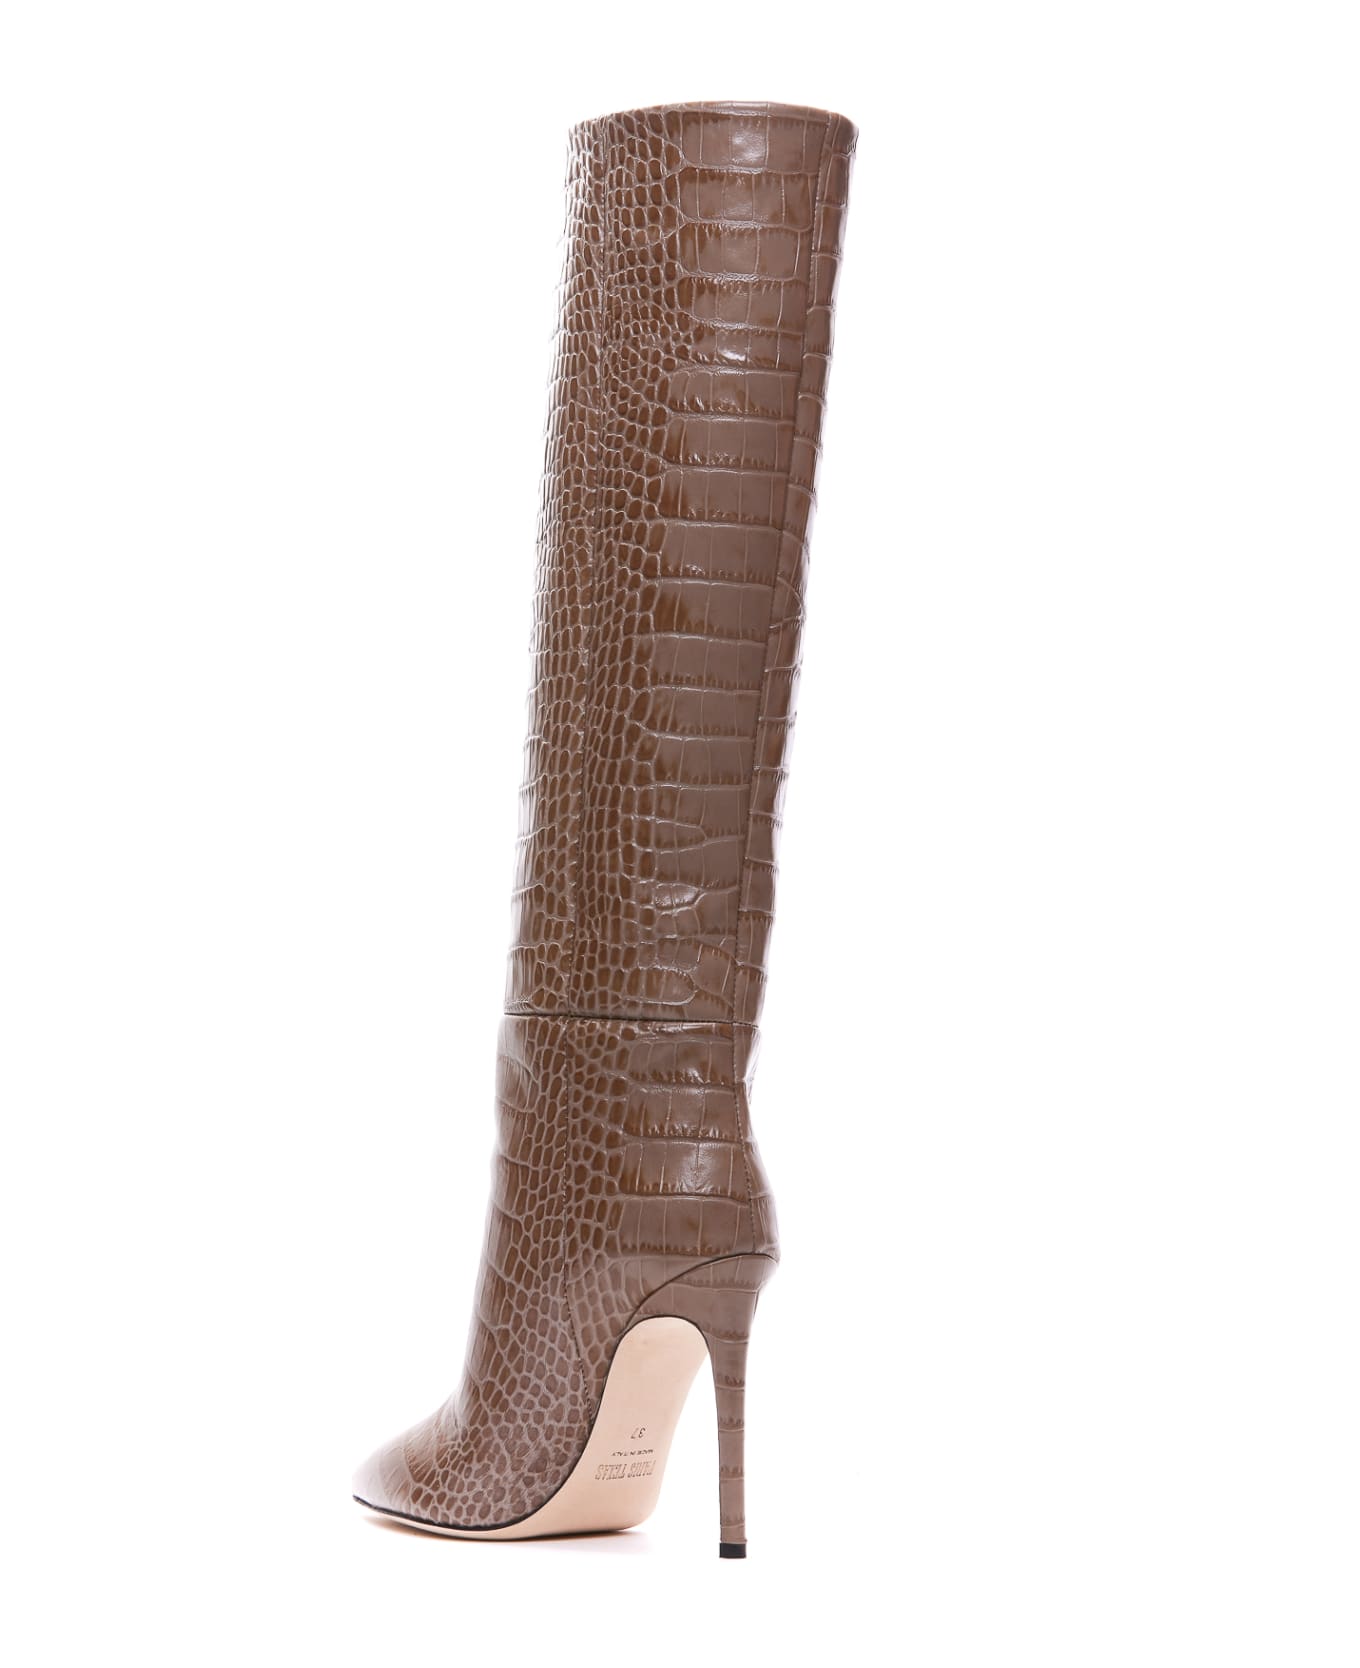 Paris Texas Stiletto Pump Boots - BROWN